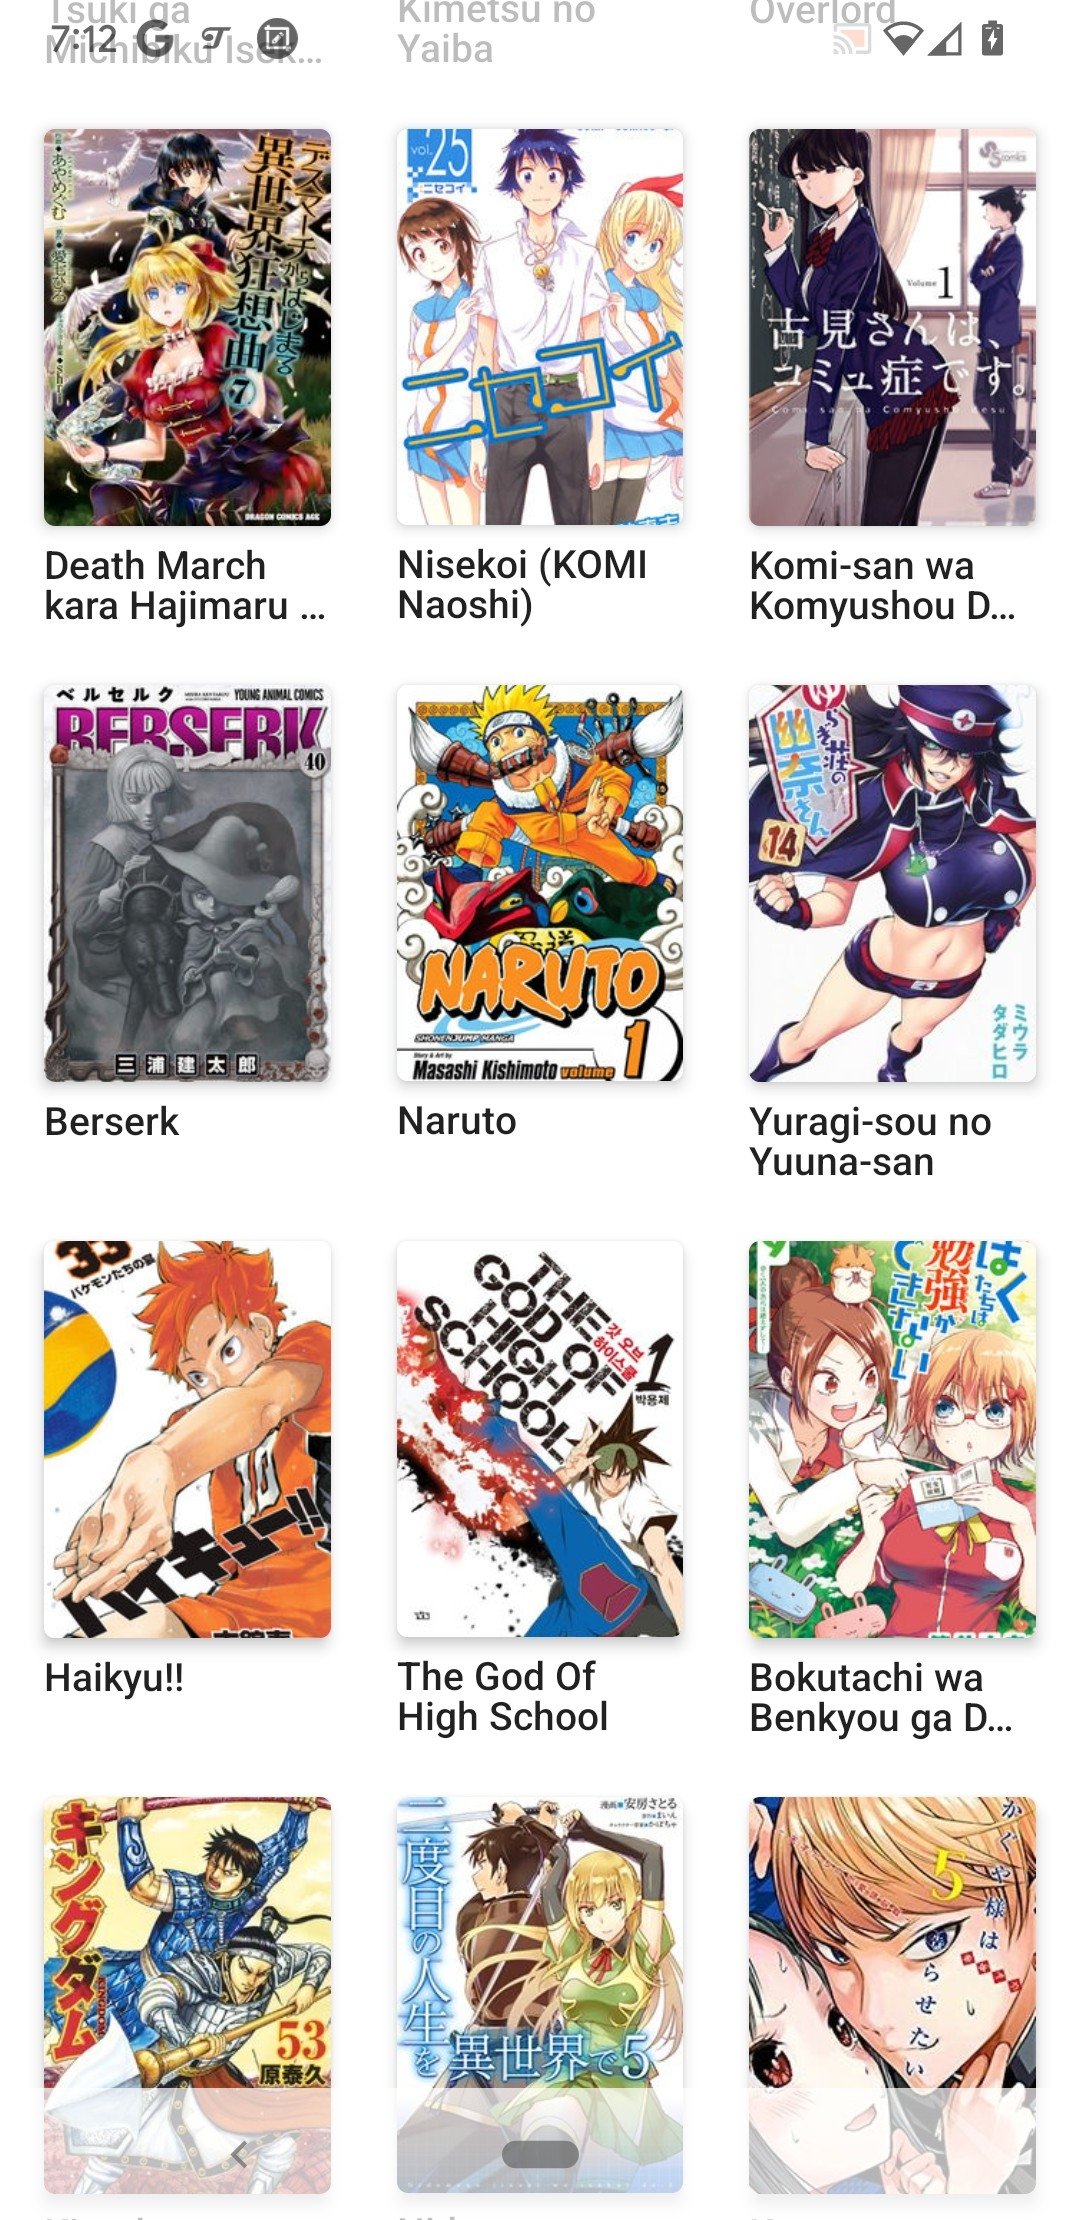 App mangago Manga GO